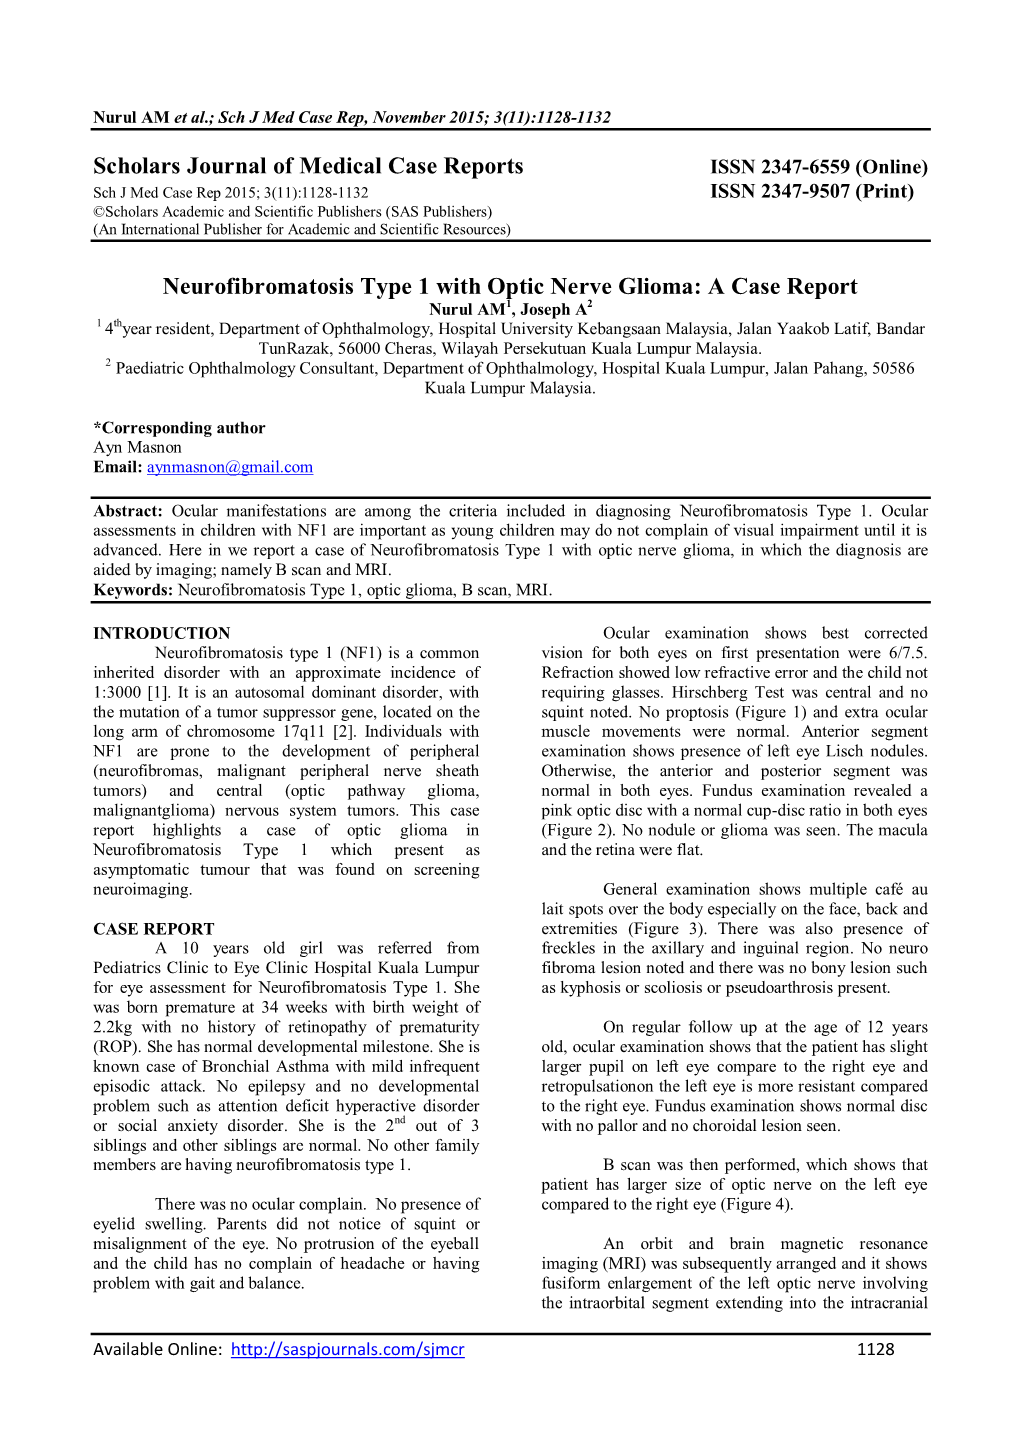 Scholars Journal of Medical Case Reports Neurofibromatosis Type 1